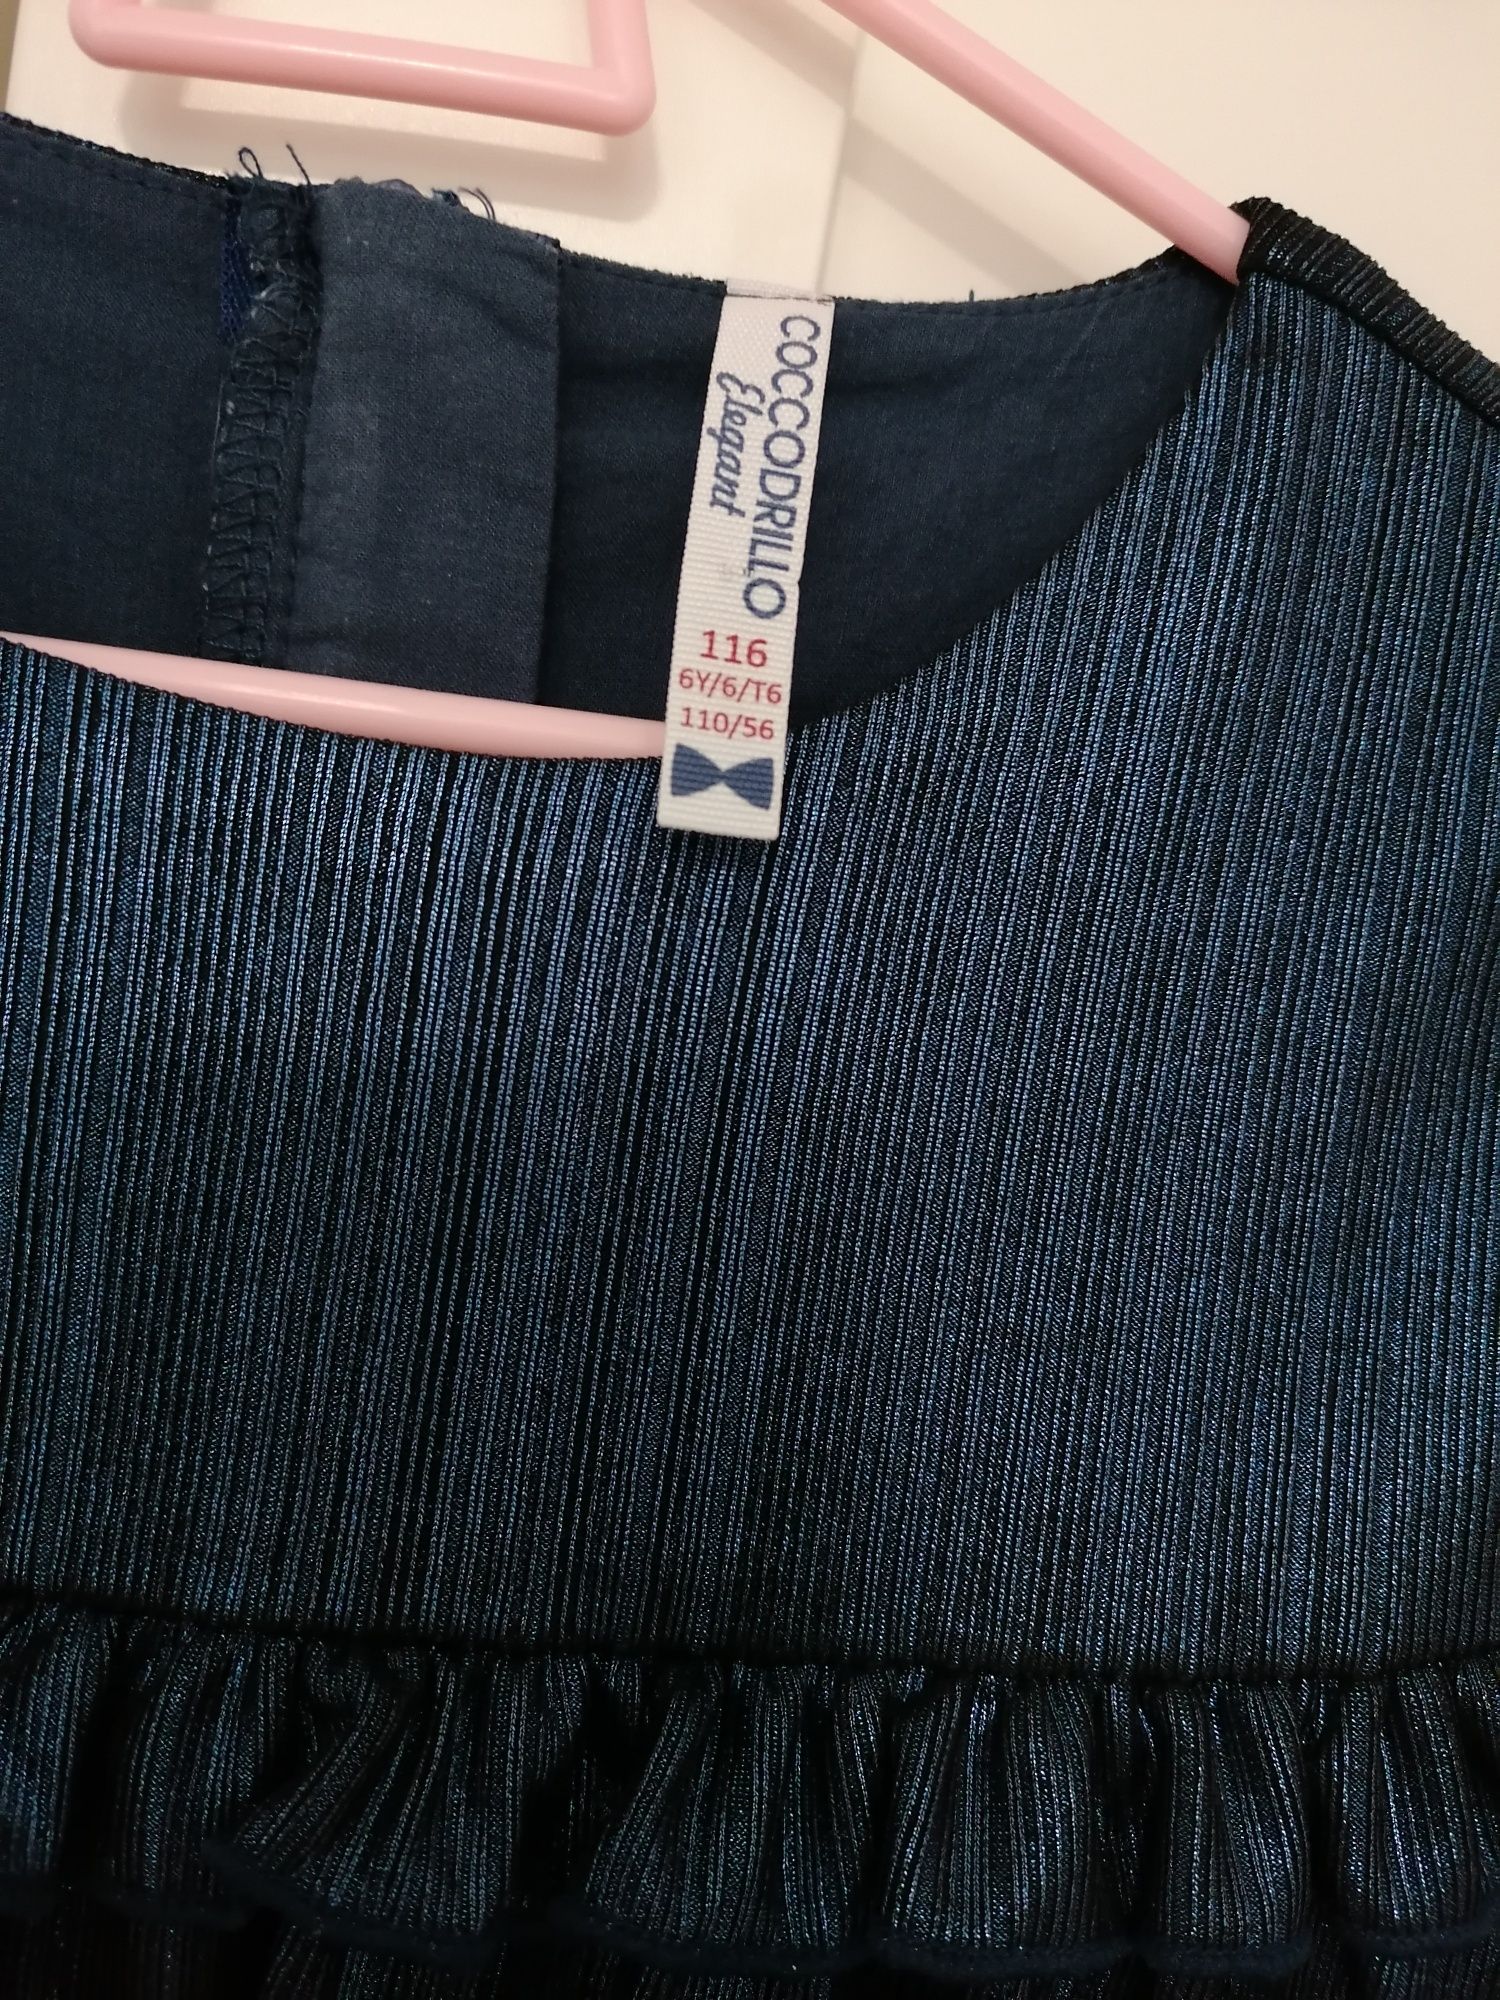 Granatowa elegancka sukienka Coccodrillo (rozmiar 116)